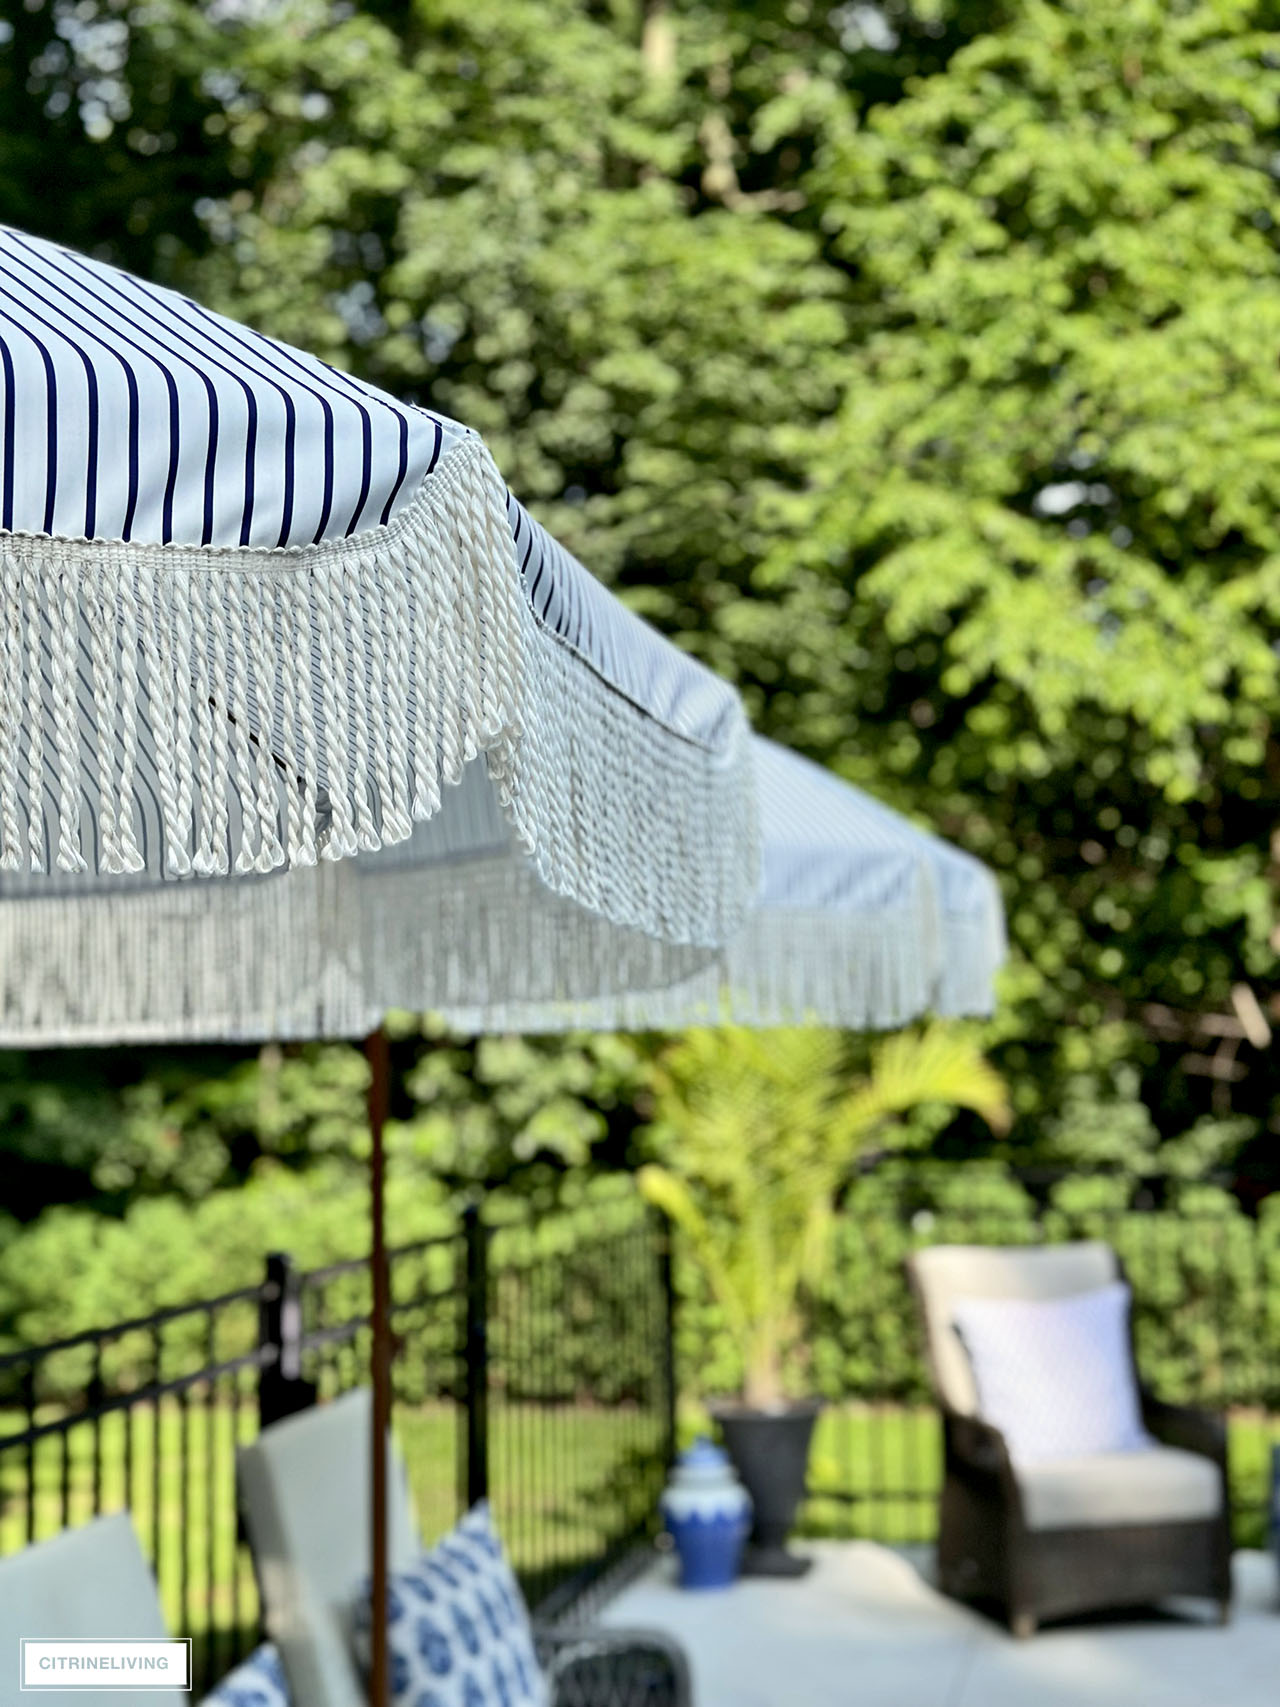 Striped patio umbrellas with fringe.